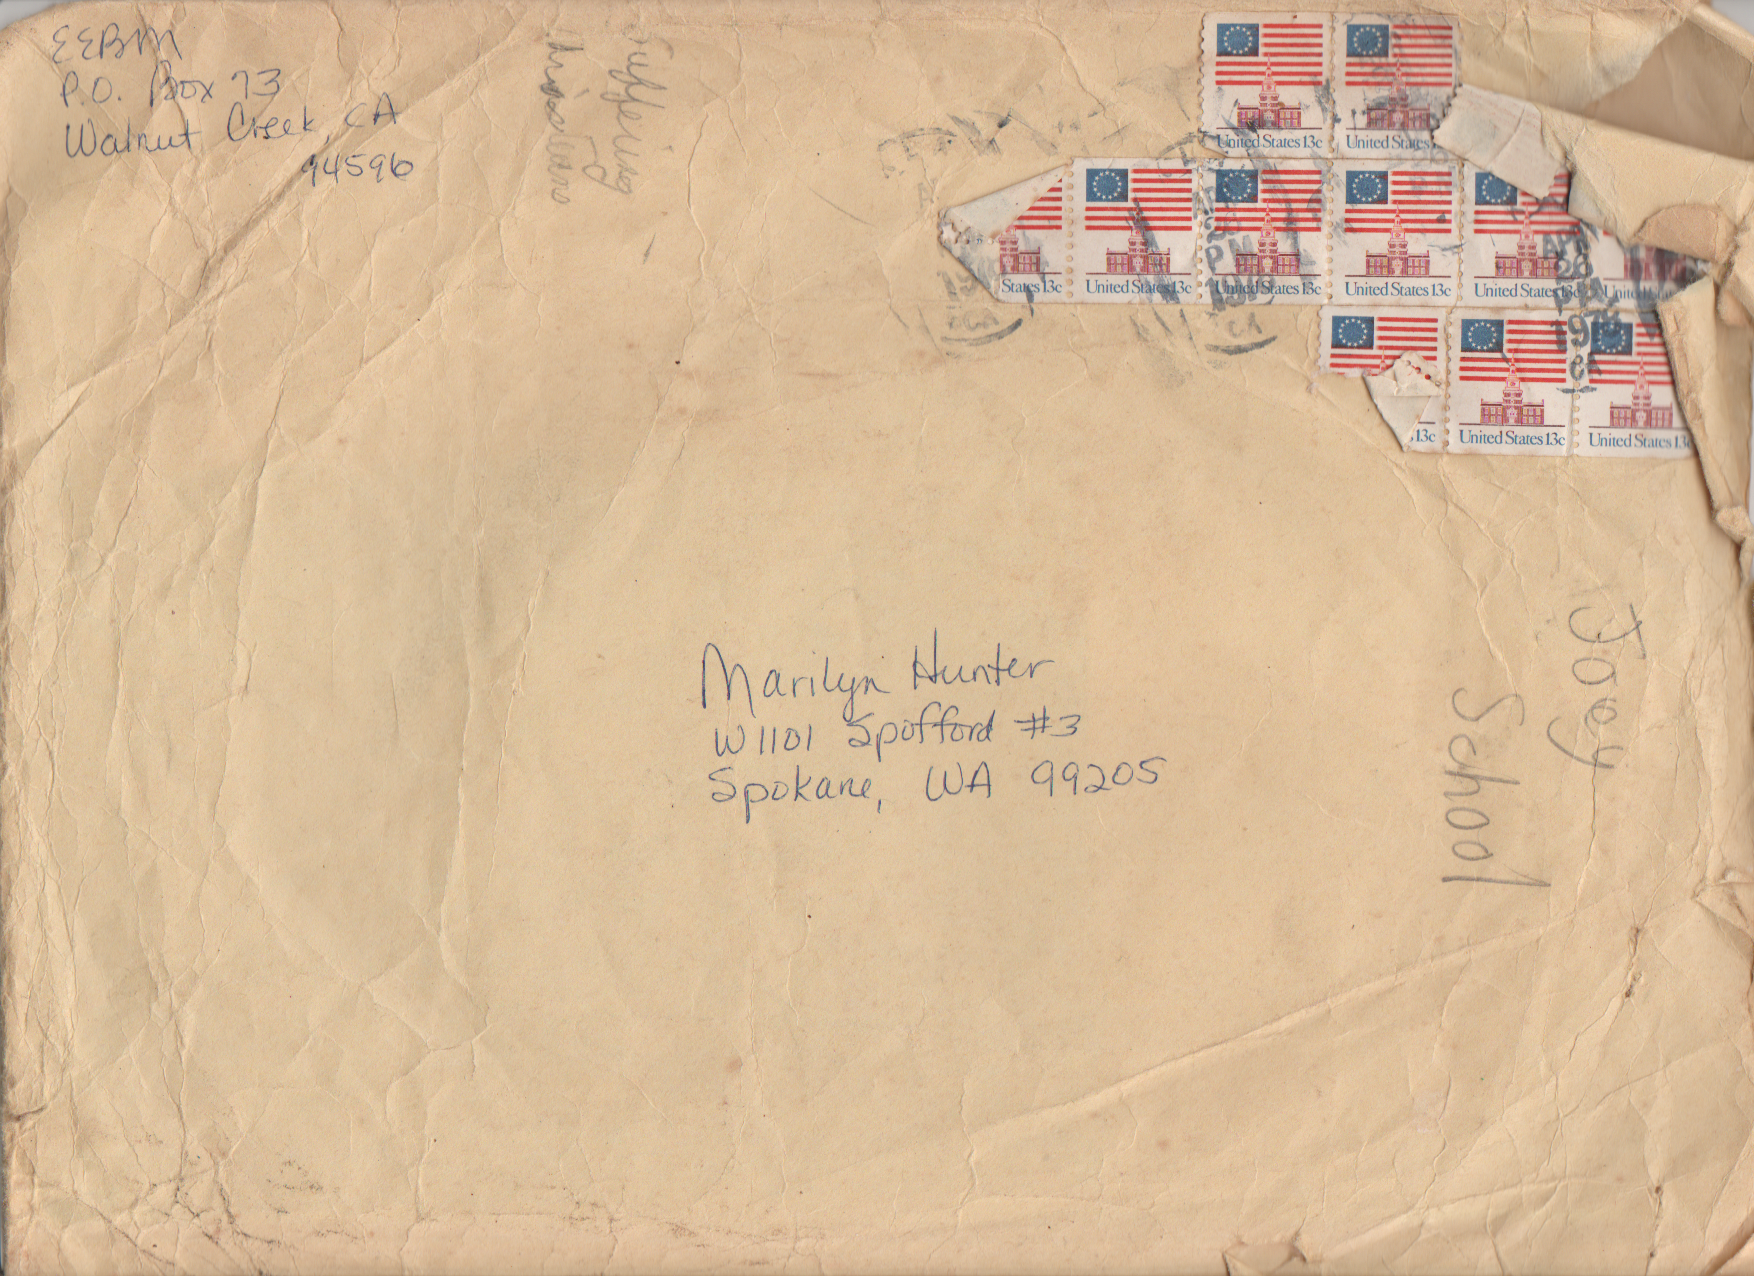 1978-04-26 - Marilyn Hunter's address.png